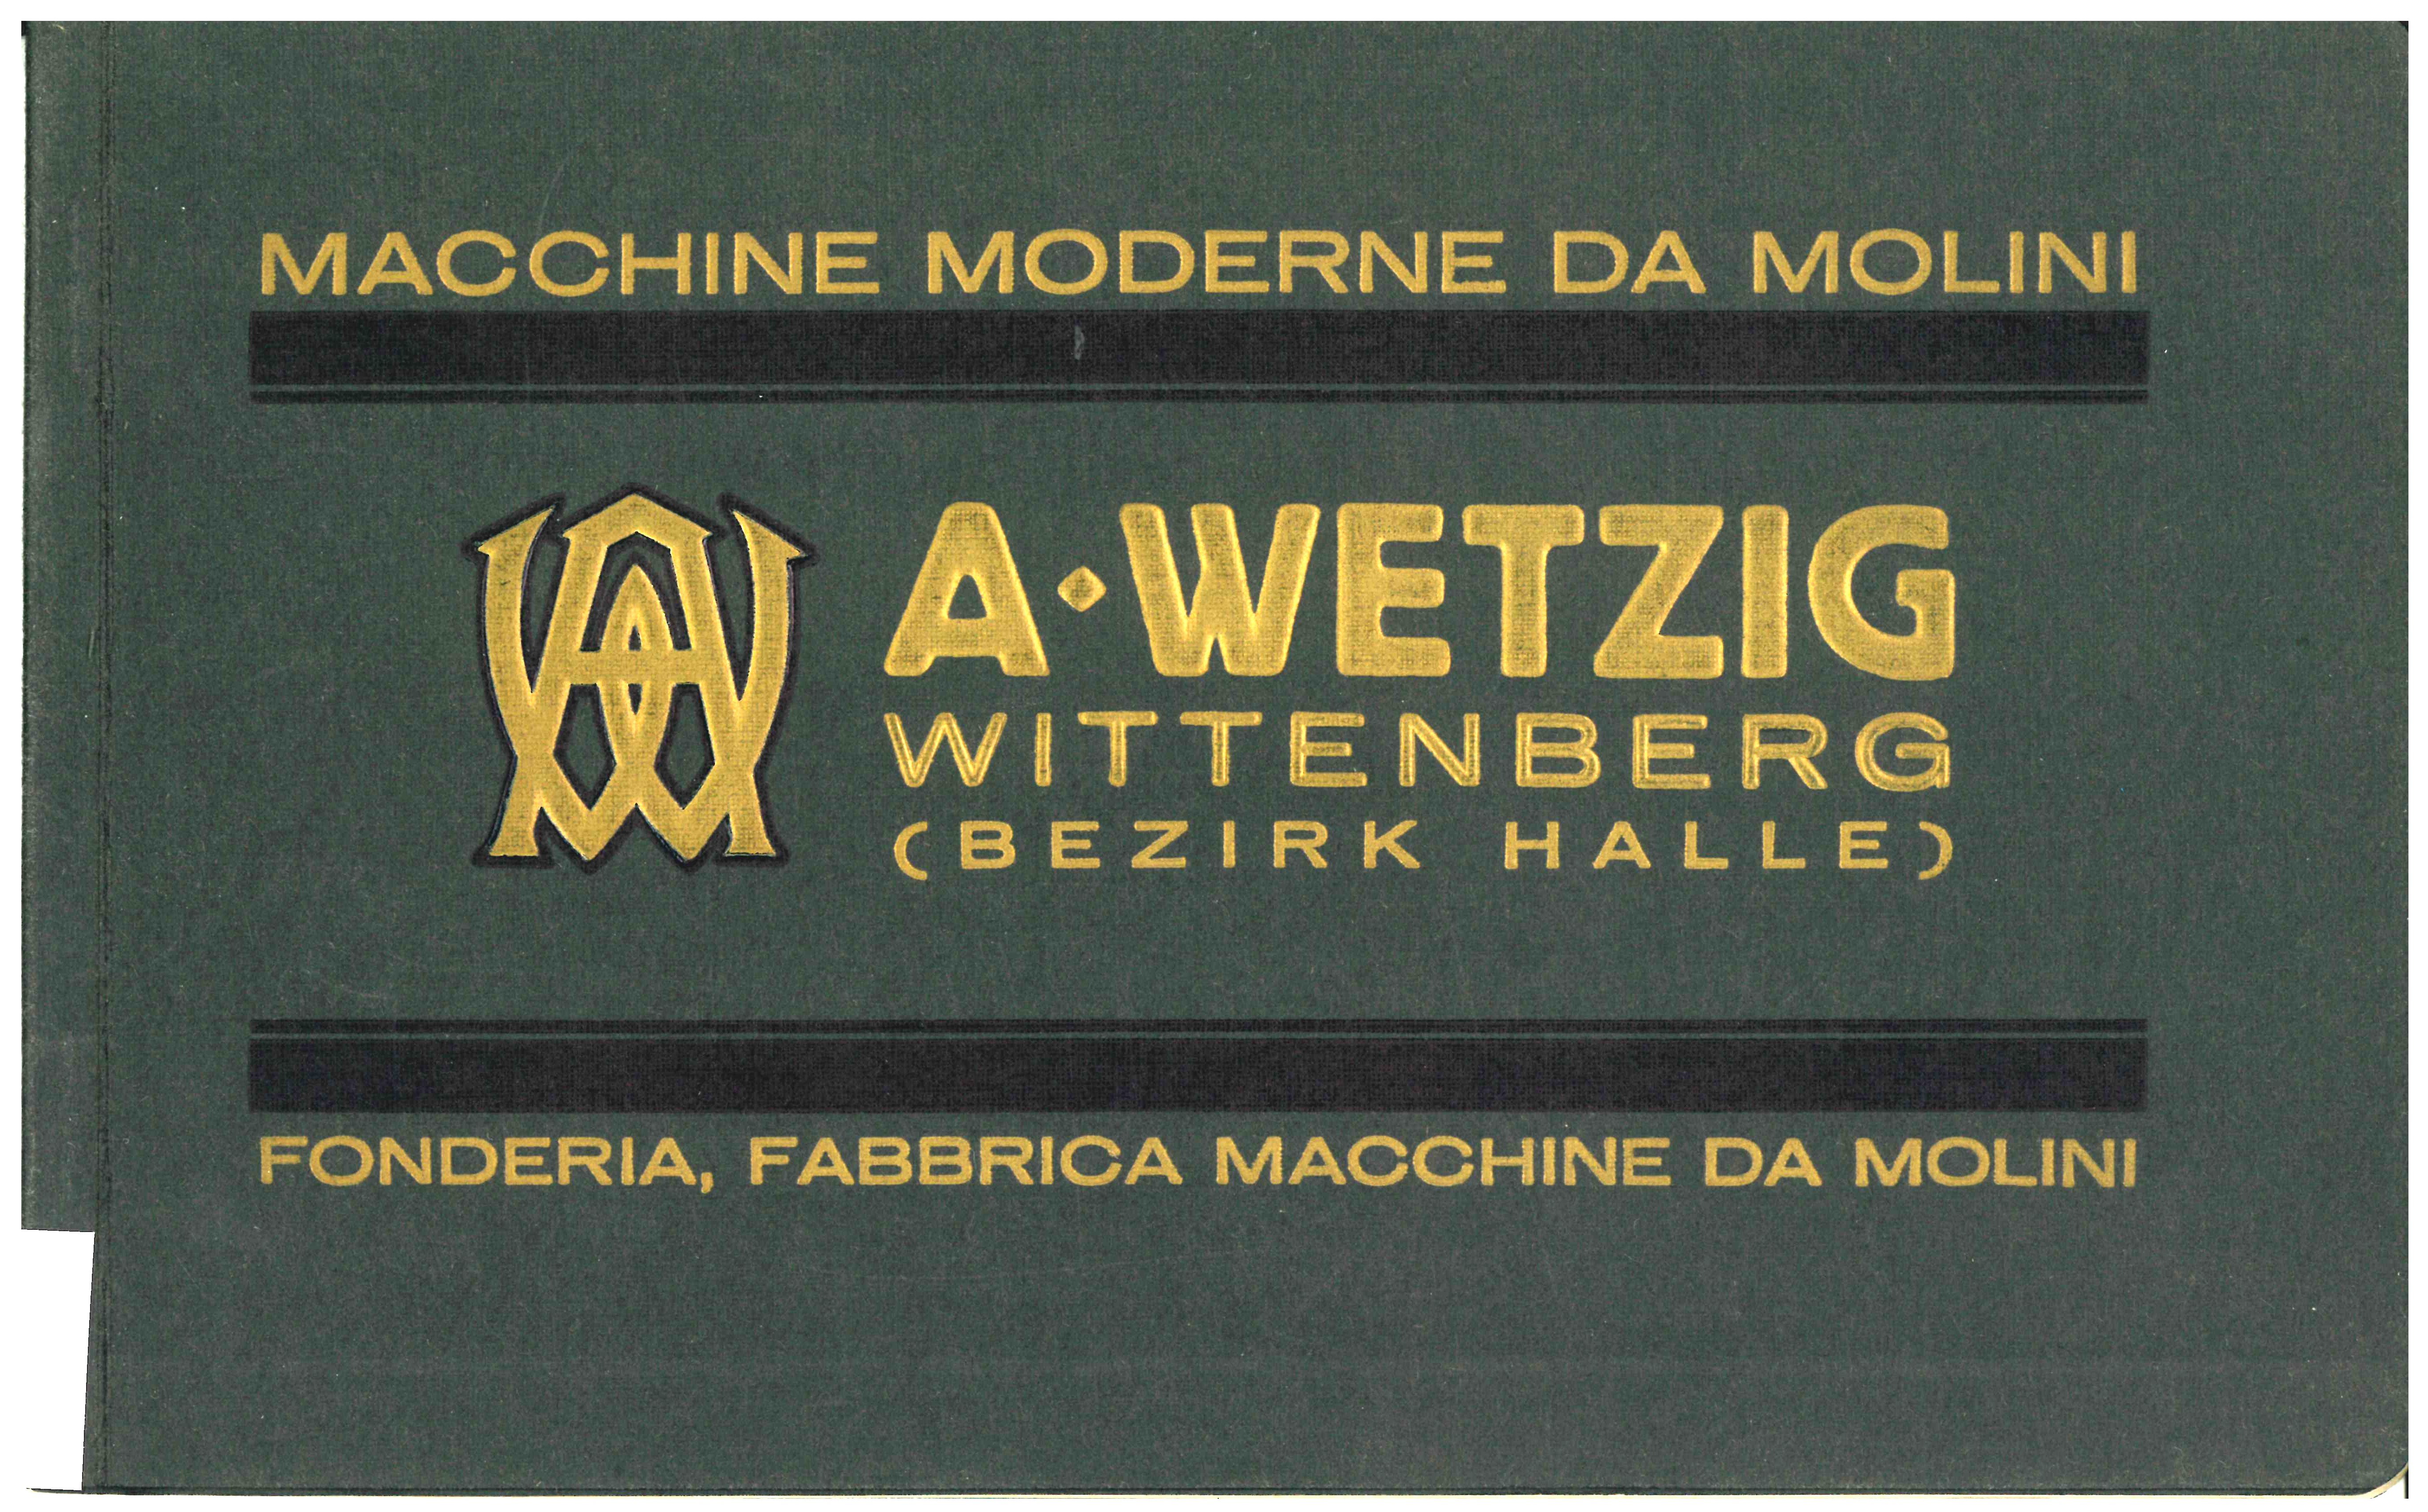 Macchine Moderne Da Molini. A. Wetzig, Wittenberg (Bezirk Halle). Fonderia, Fabbrica Macchine Da Molini (Historische Mühle von Sanssouci CC BY-NC-SA)